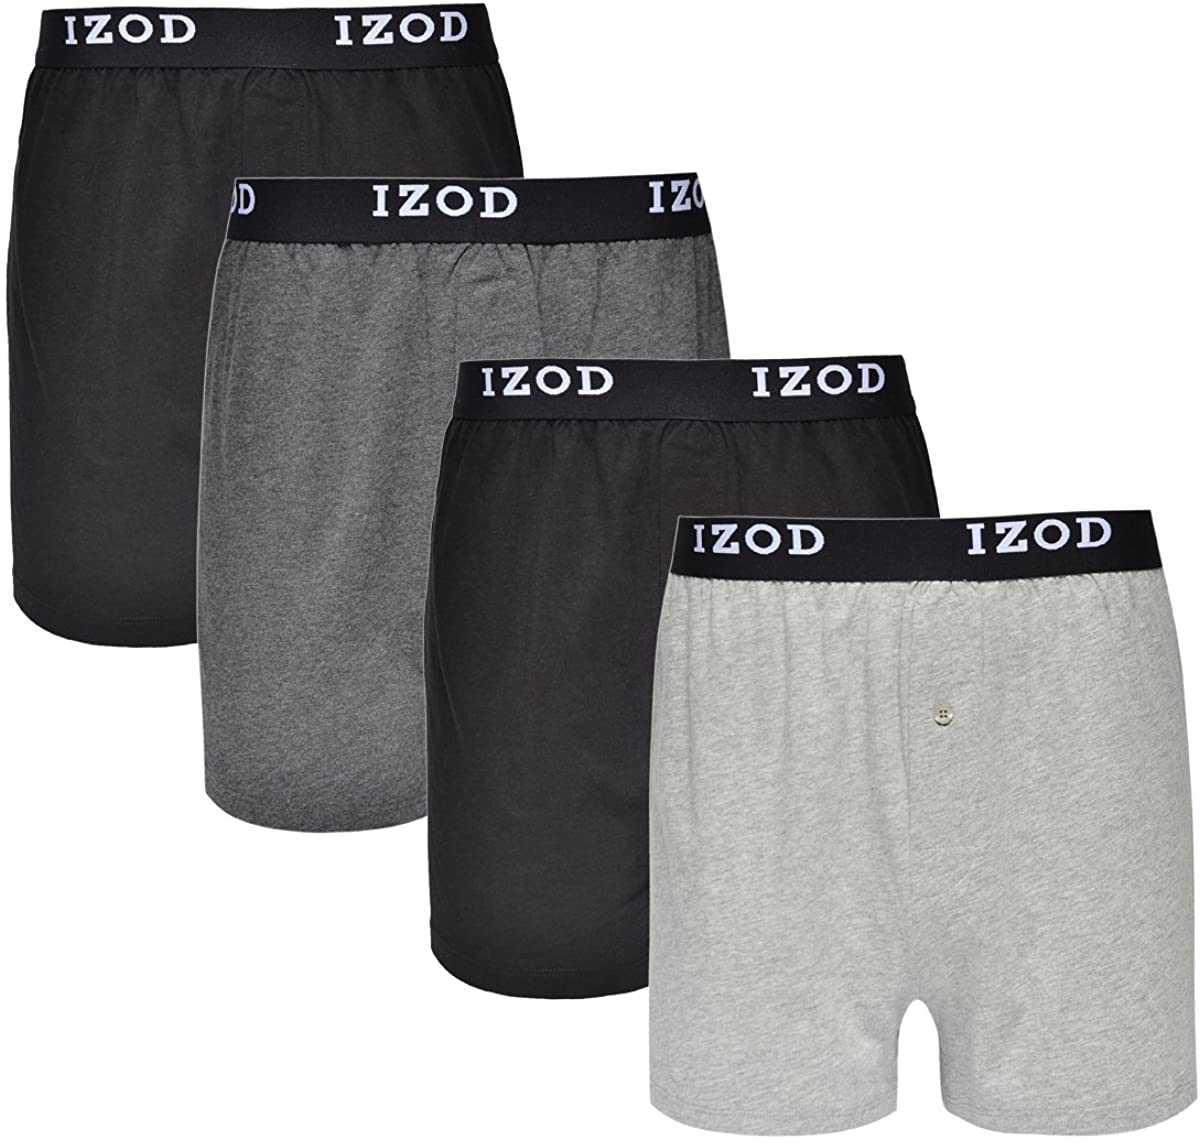 IZOD Mens Cotton Knit Boxers 4-Pack | eBay